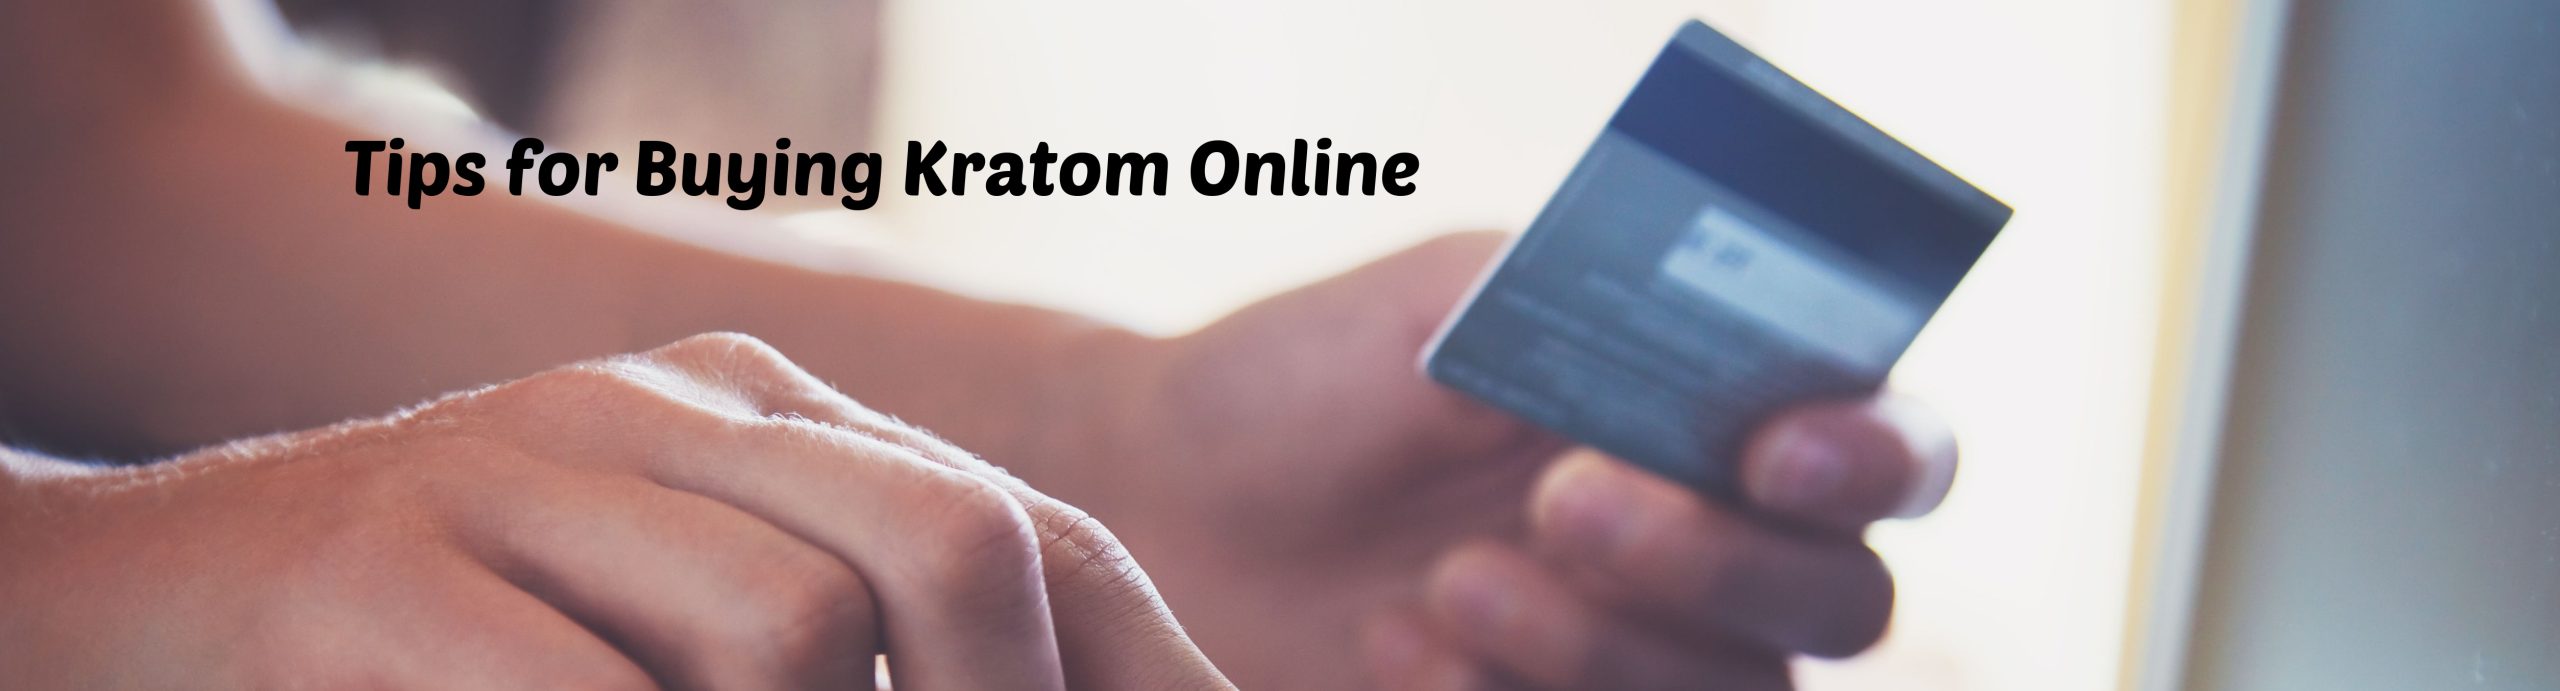 image of tips for buying kratom online